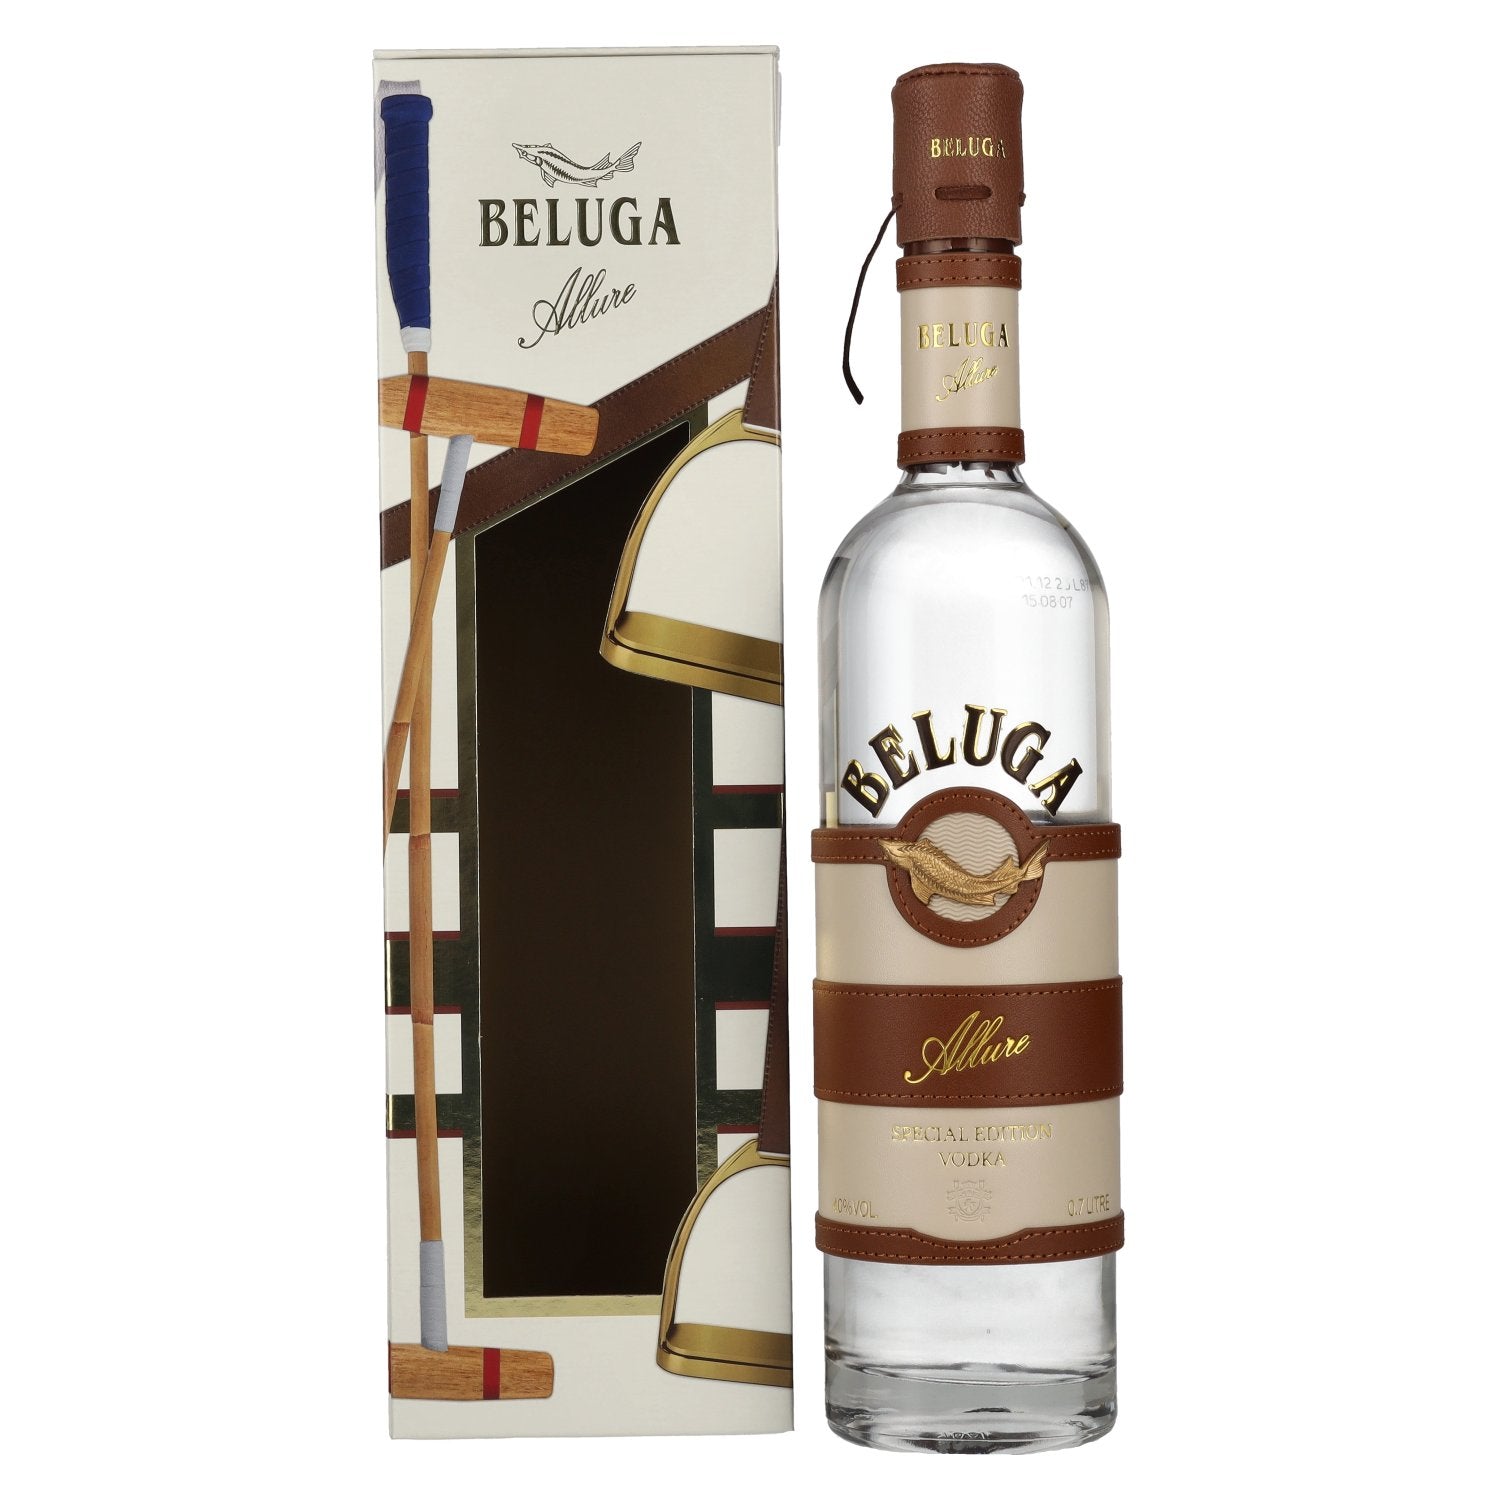 Beluga Allure Montenegro Special Edition Vodka 40% Vol. 0,7l in Giftbox